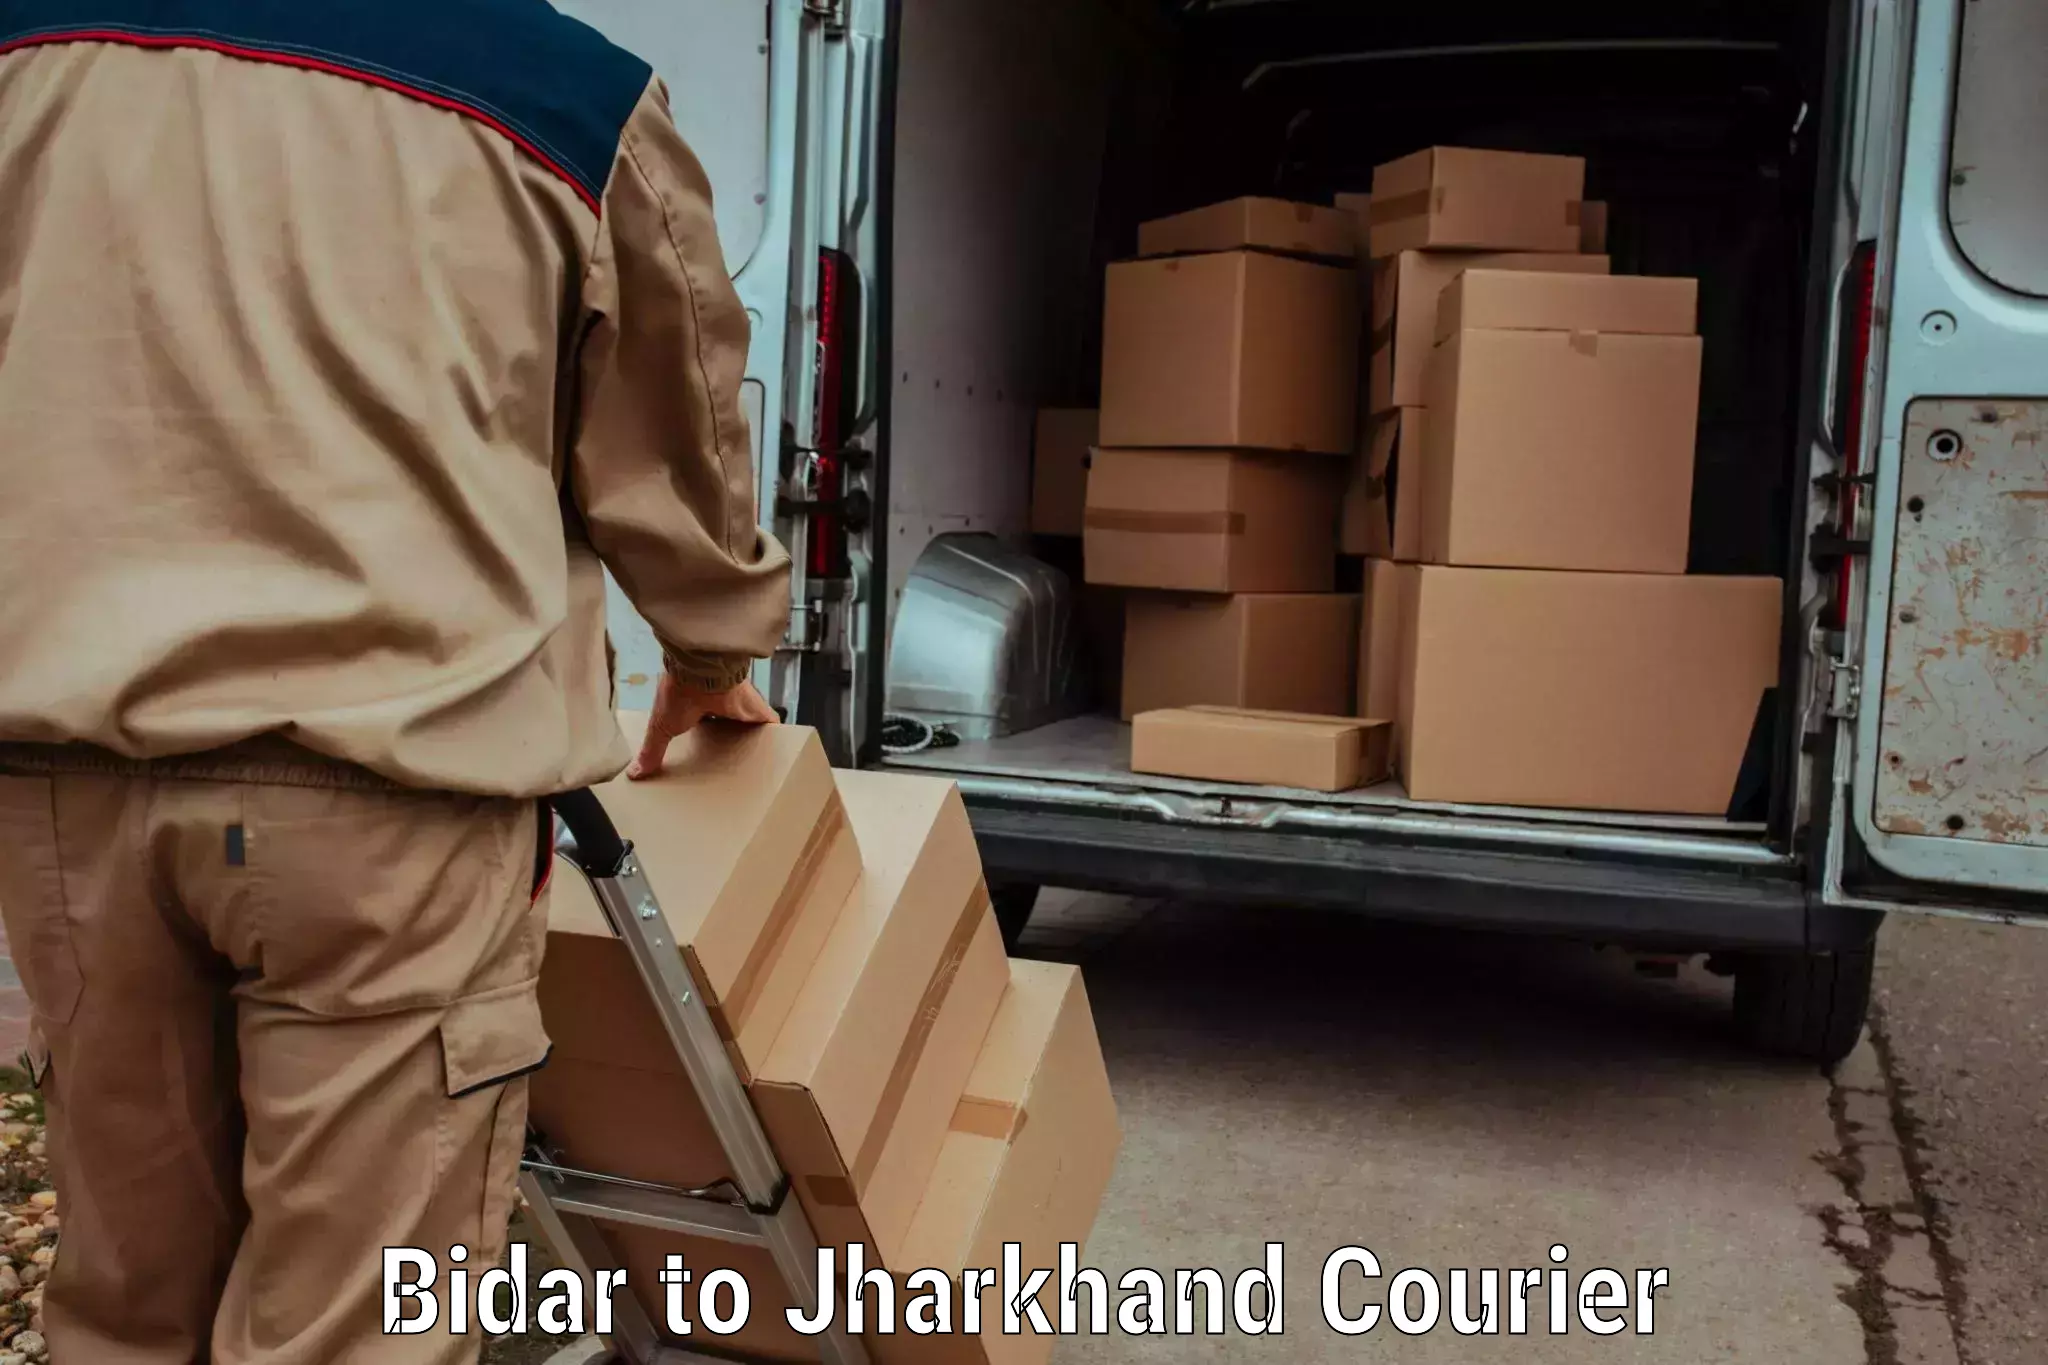 User-friendly delivery service Bidar to Kedla